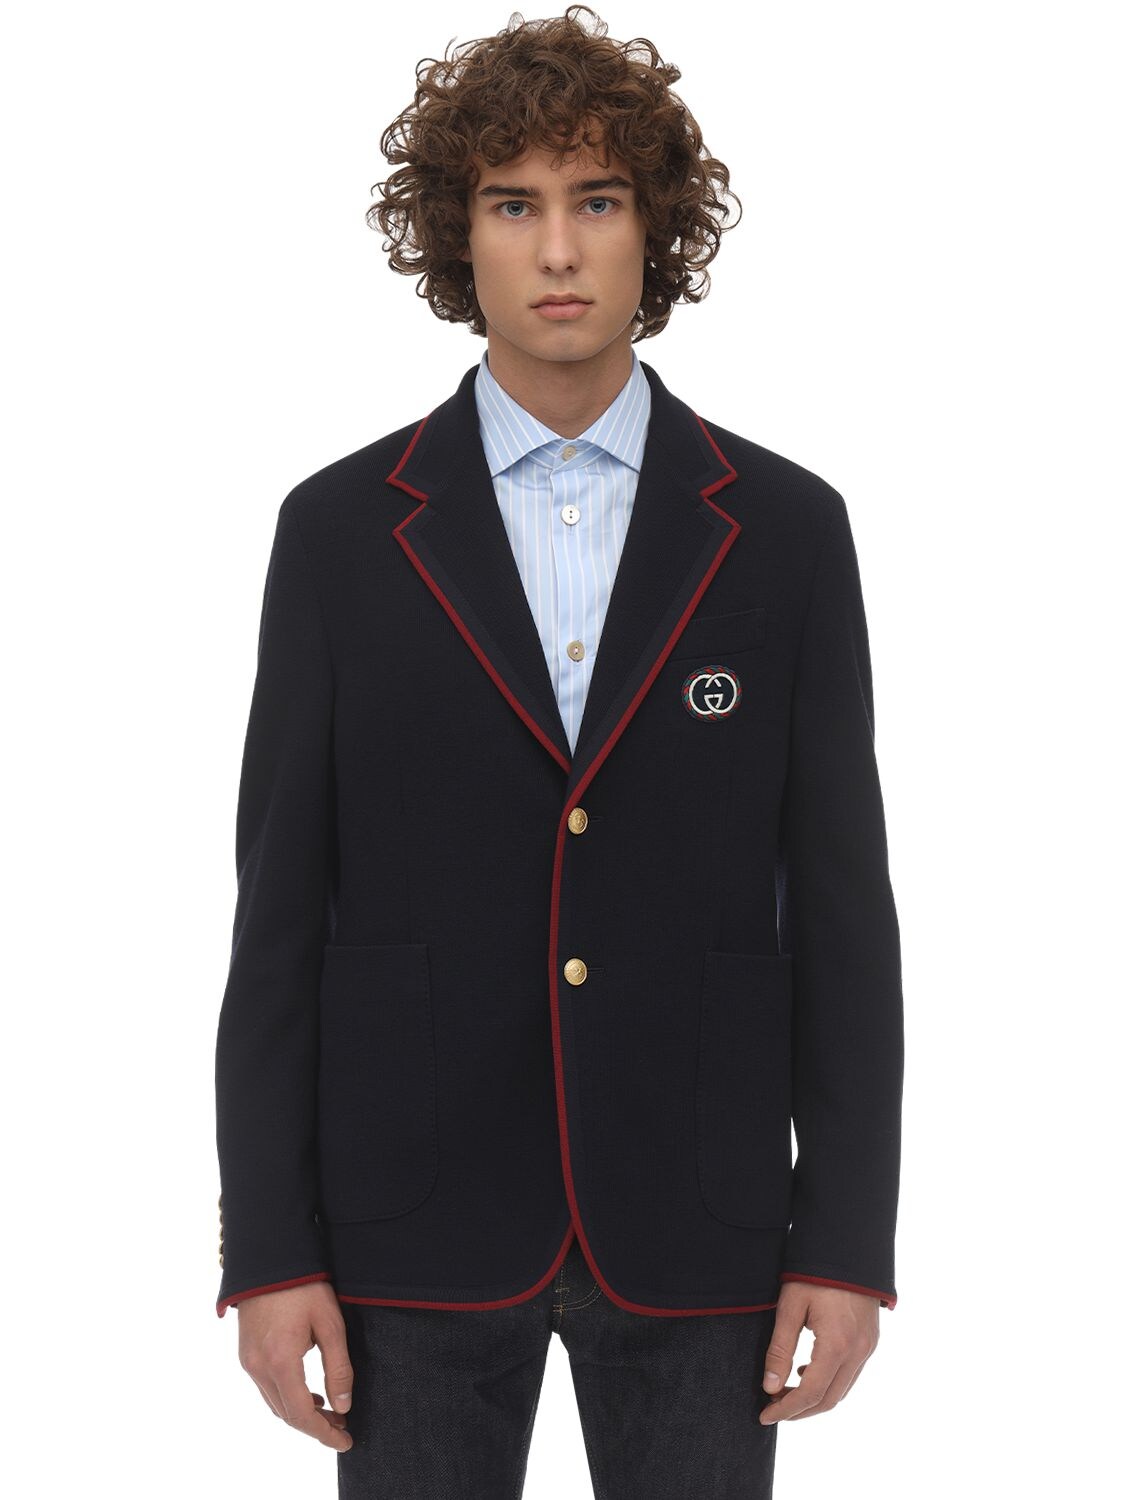 New Wool & Cotton Jersey Jacket | The Fashionisto